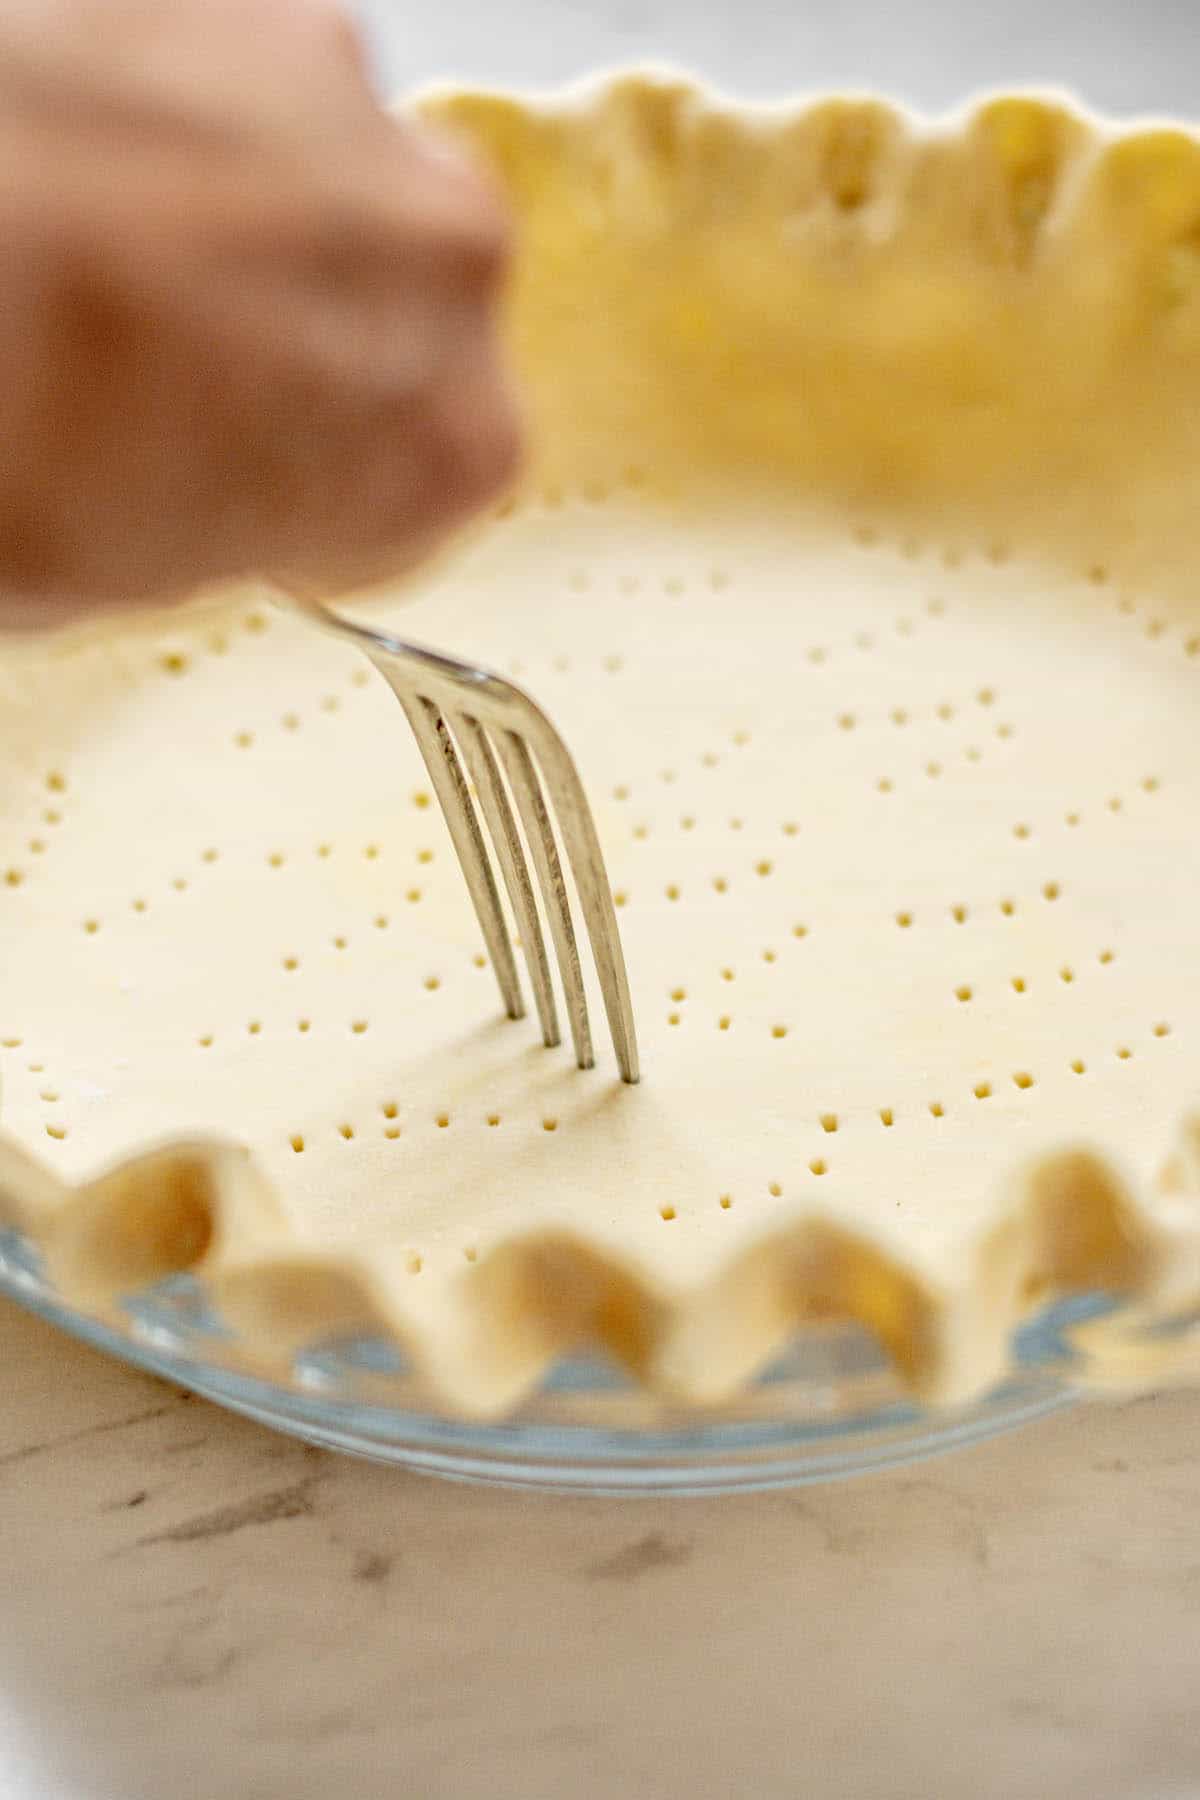 fork pricking pastry.